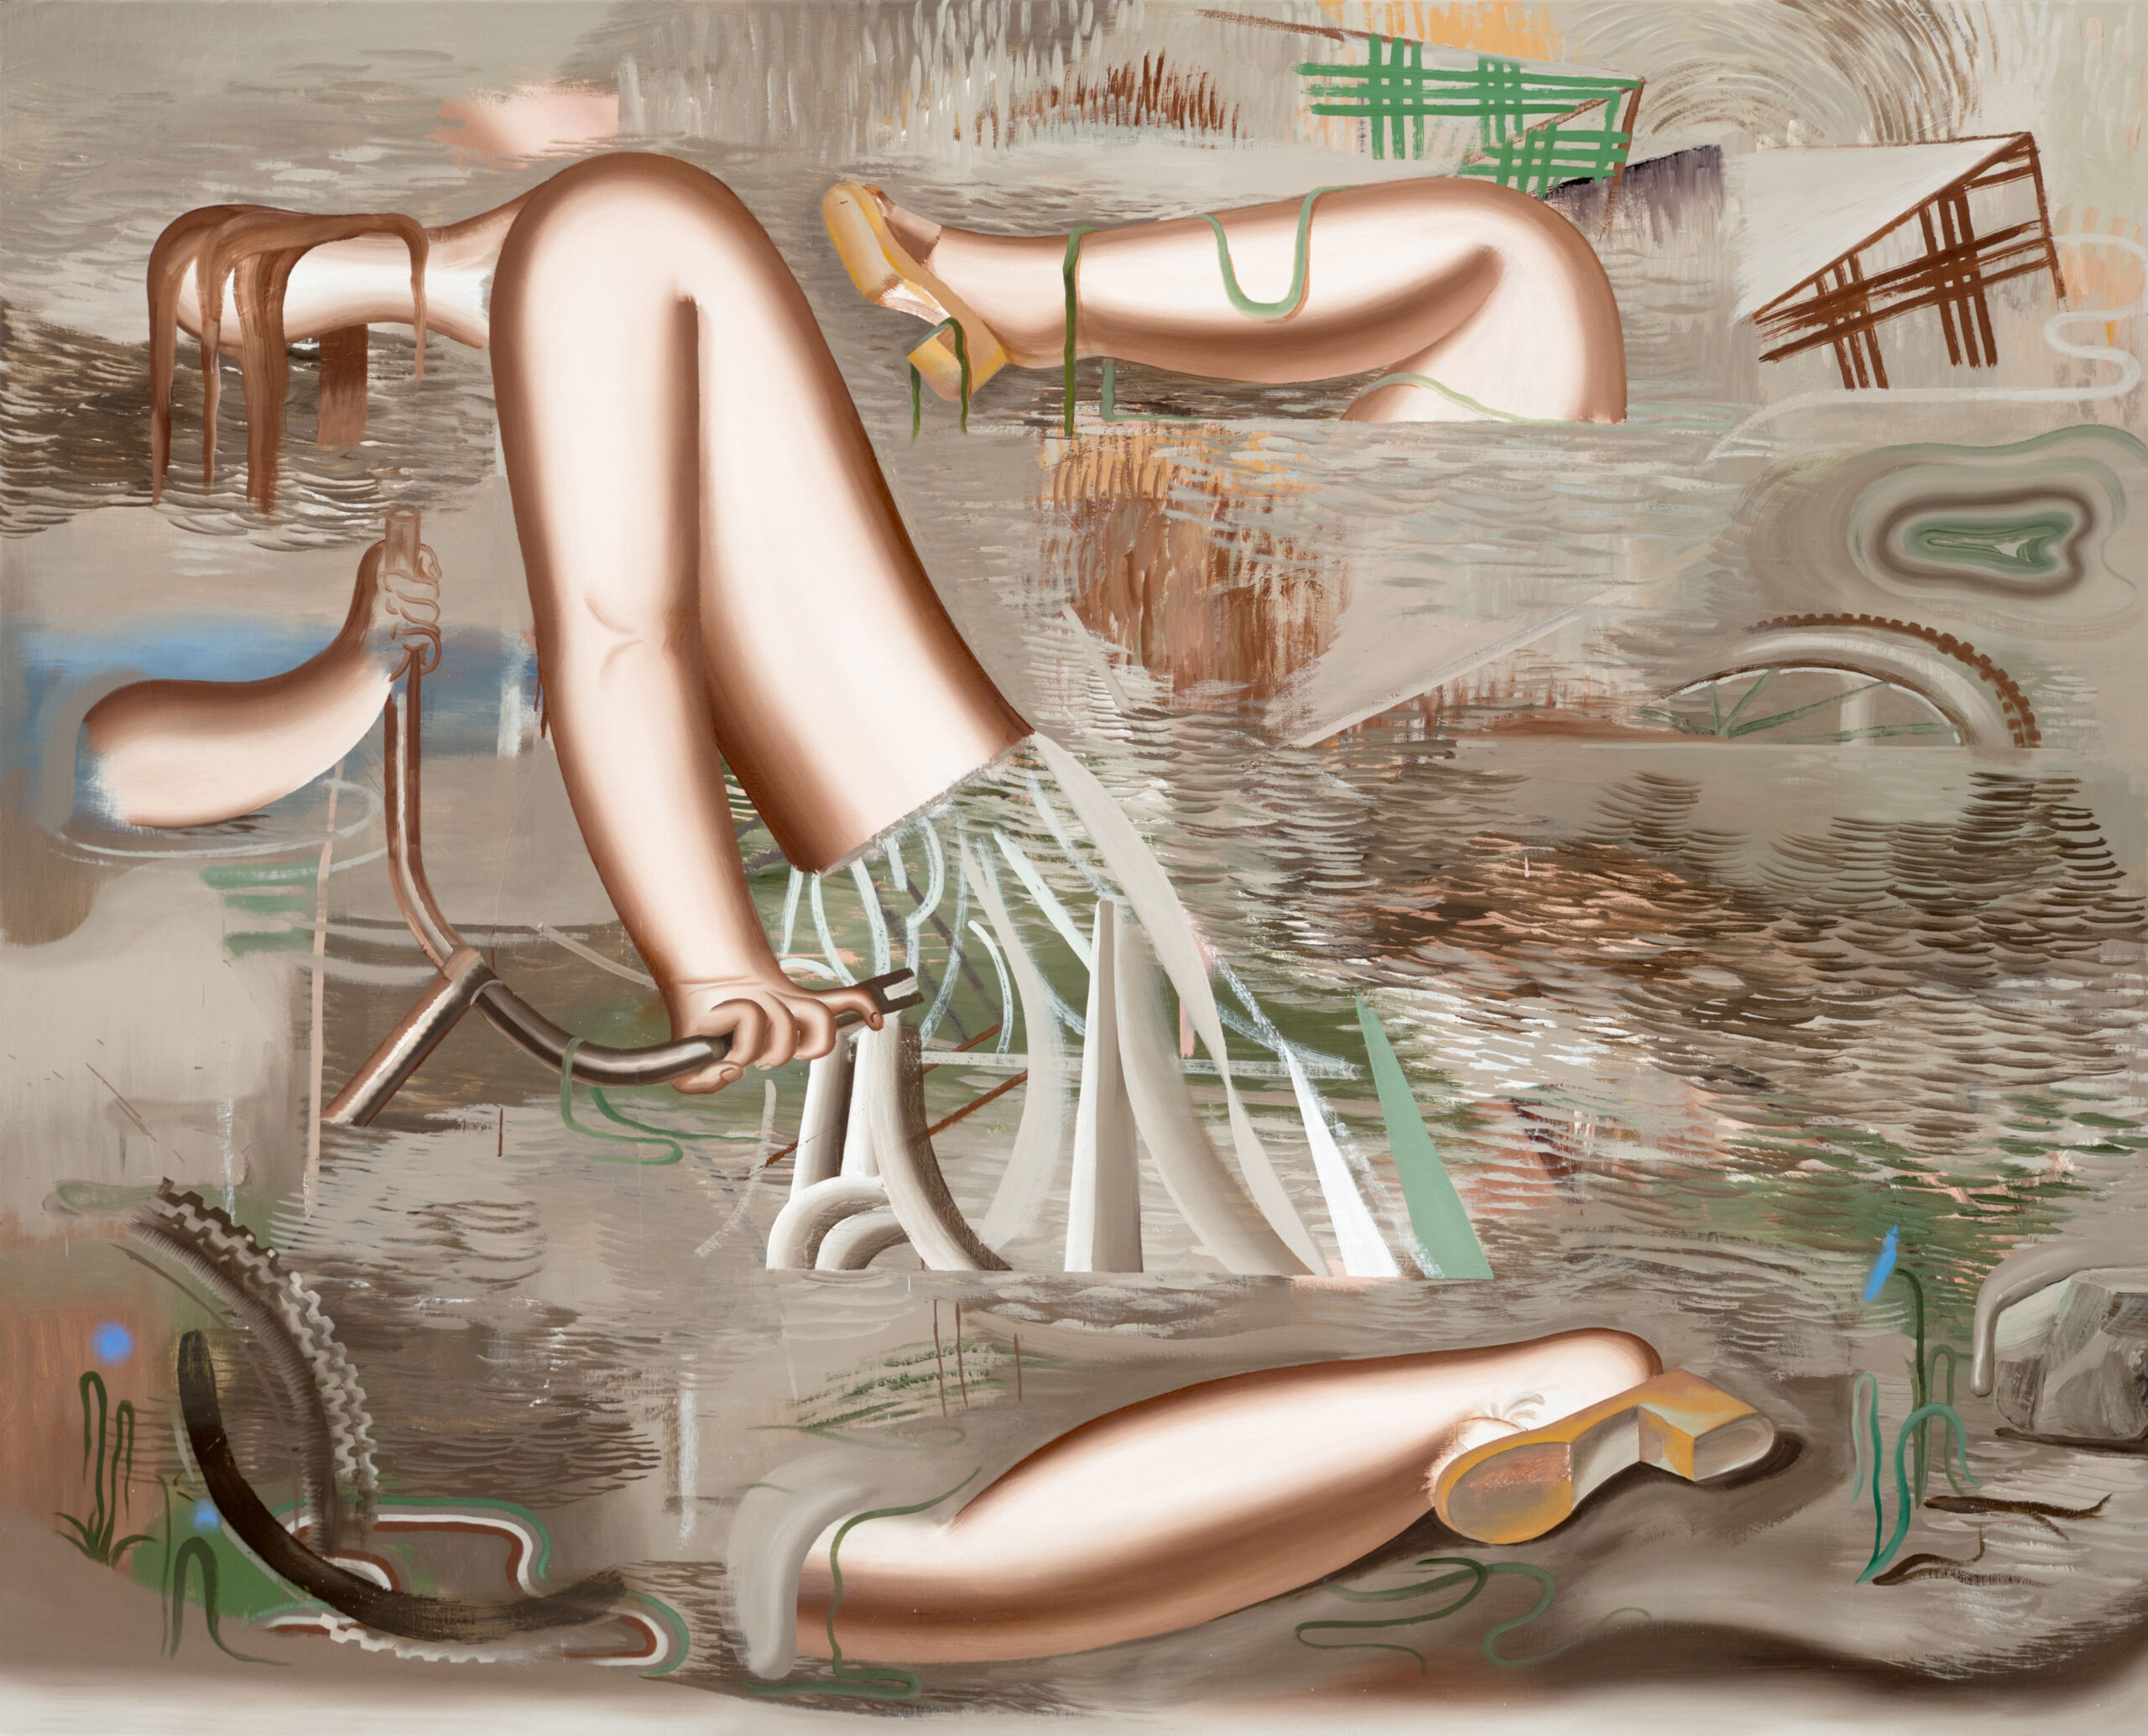 Kristina-Schuldt-reverse-2016-Oil-and-egg-tempera-on-canvas-170-x-210-cm